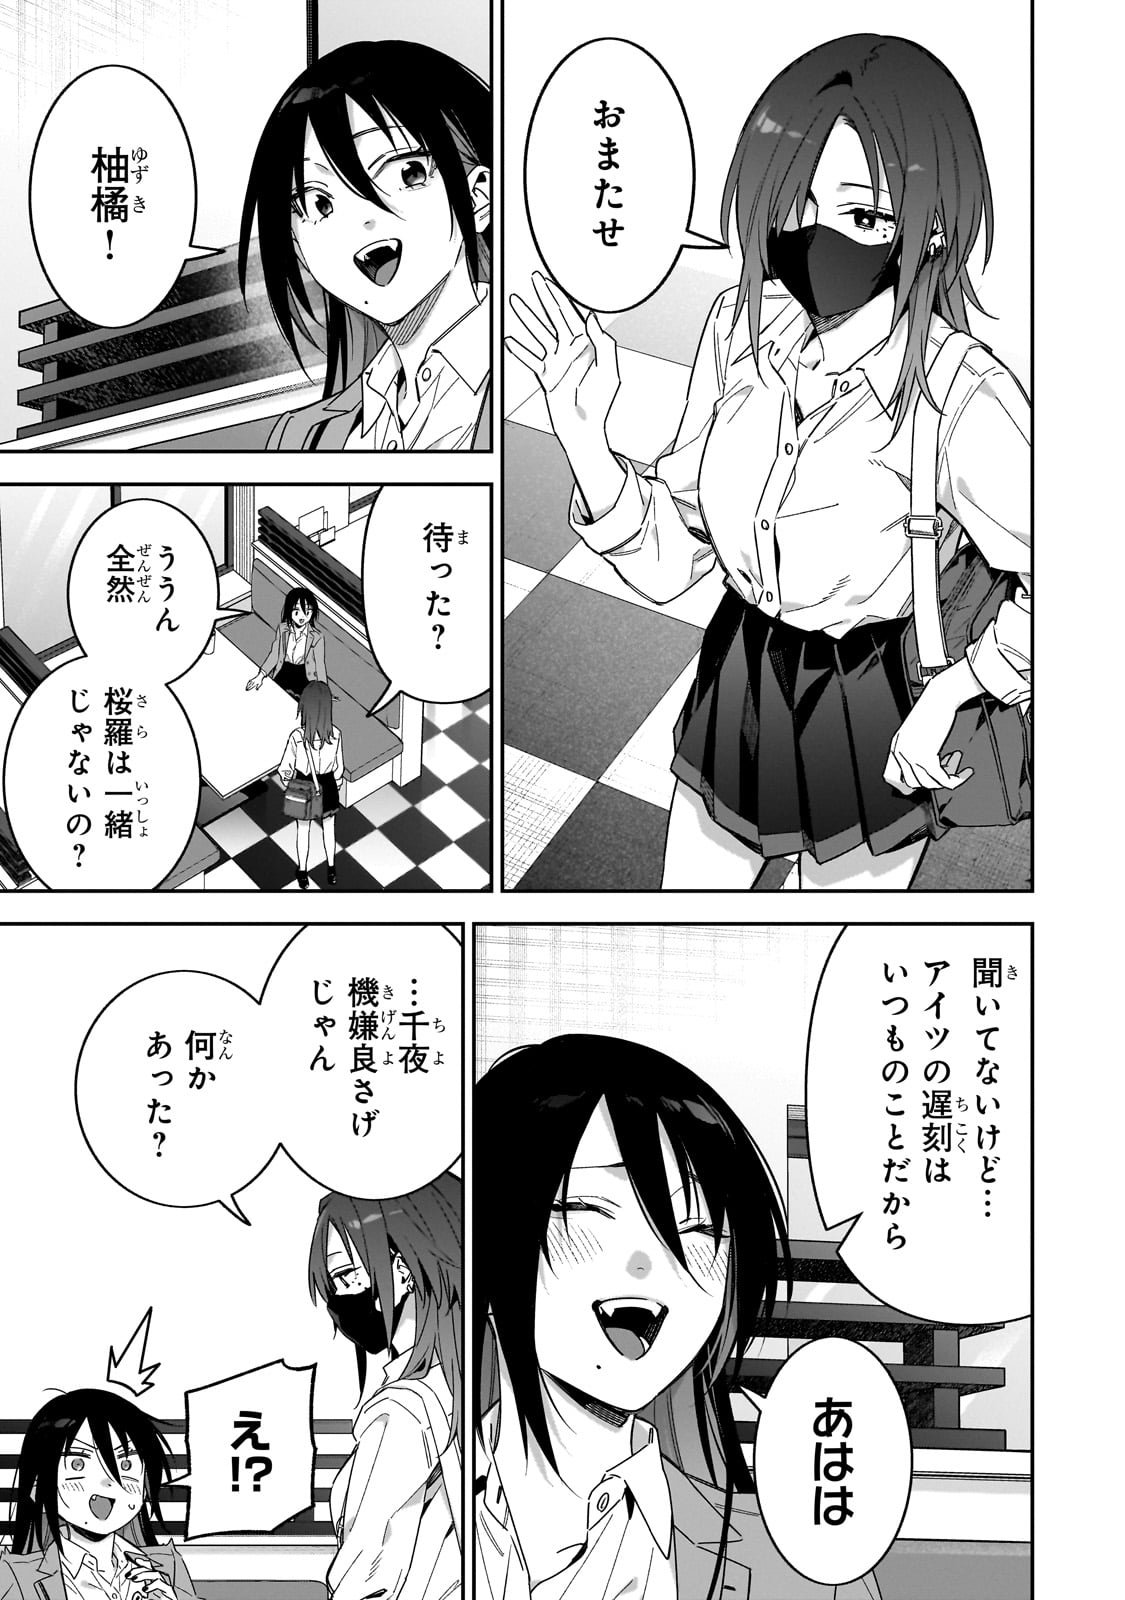 xxshinaide! Tsukine-san. - Chapter 6 - Page 3